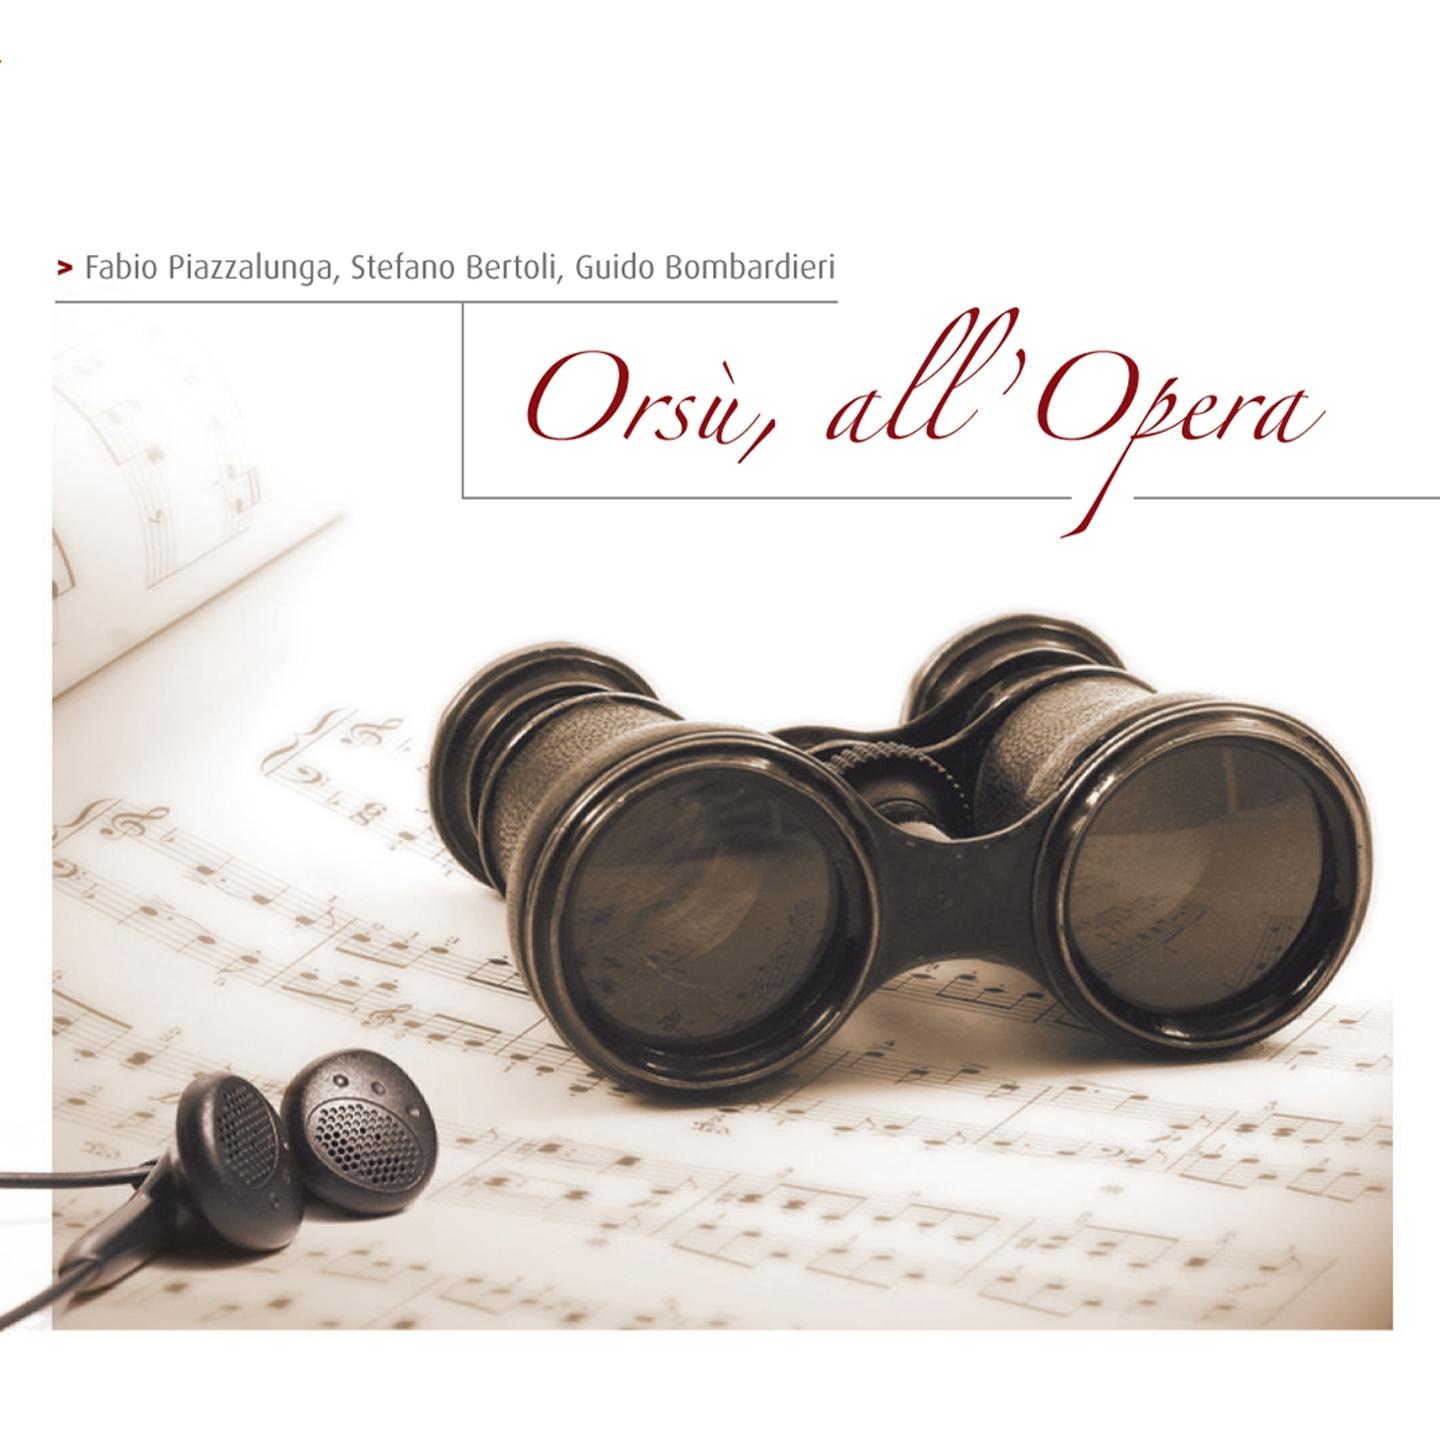 Orsu, all' opera